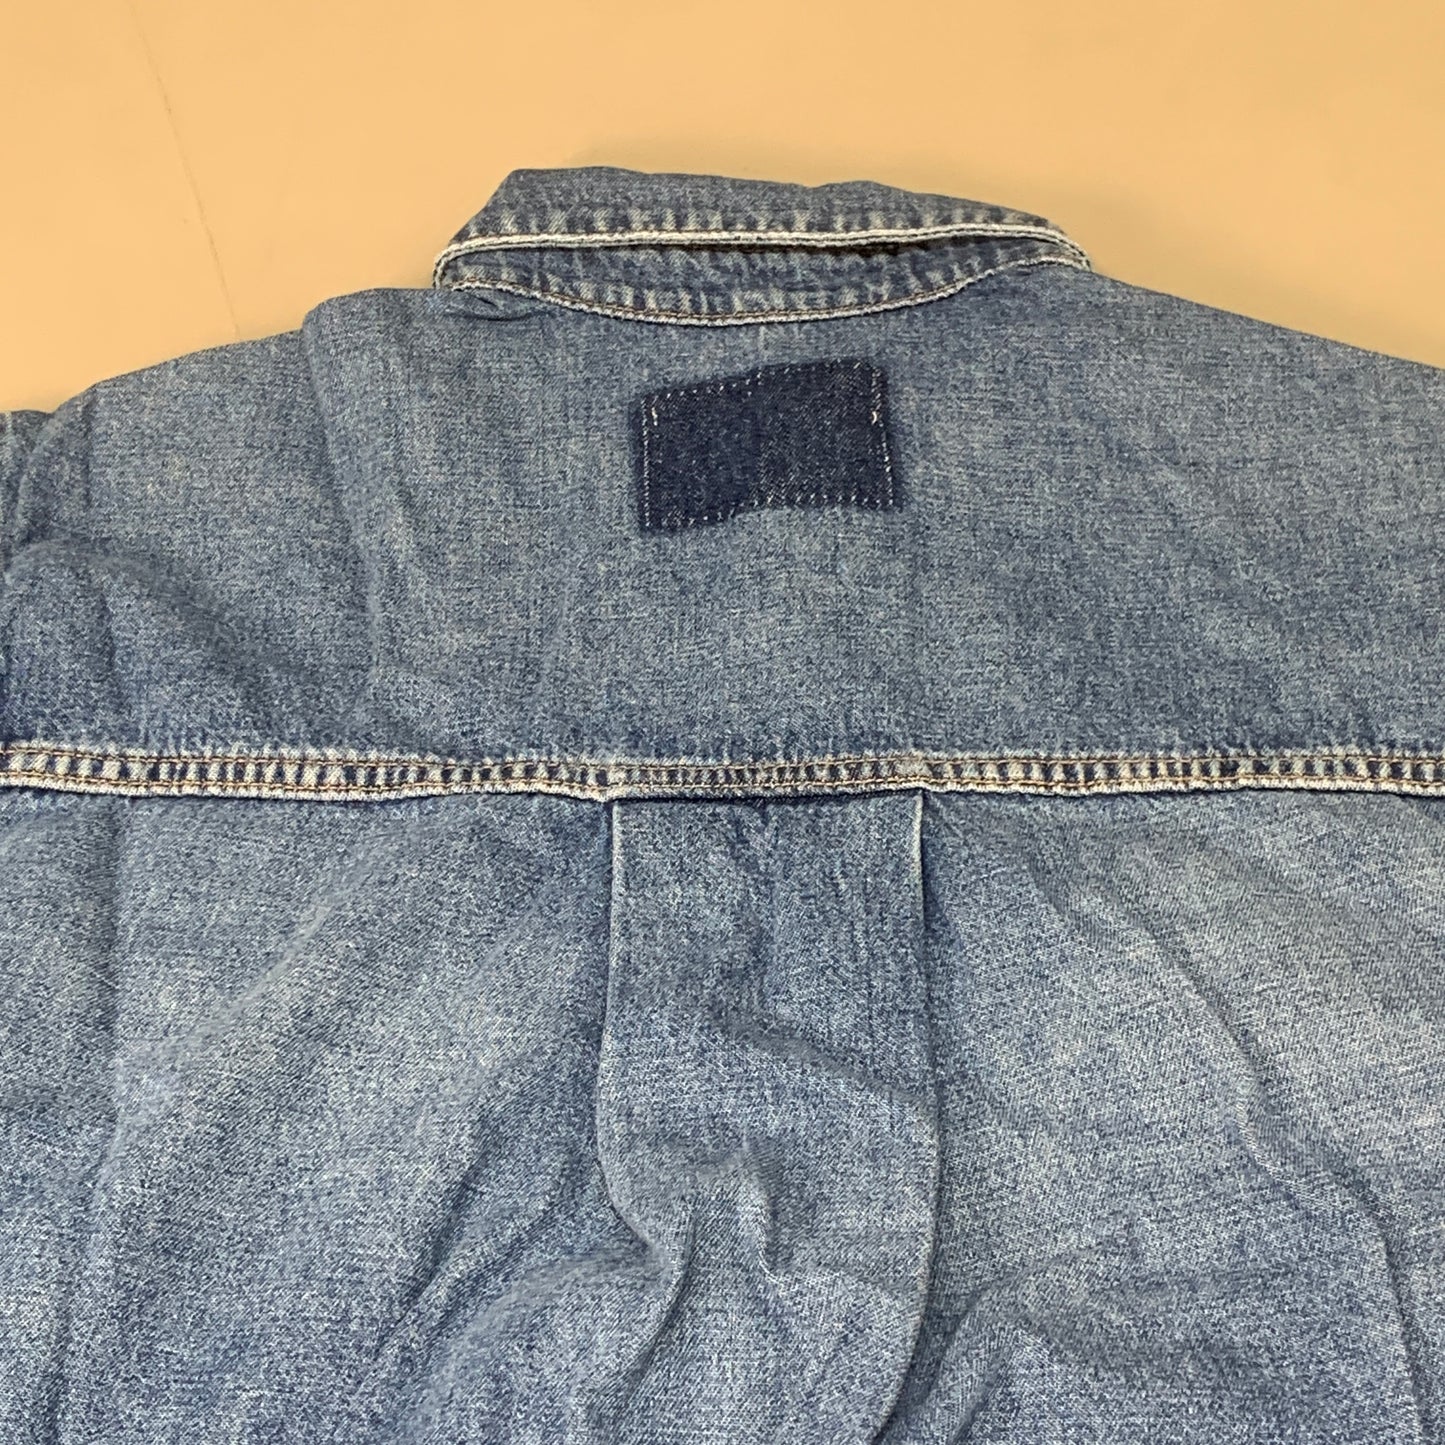 ETICA Harriette Shirt Jacket w/ Front Top Pockets & Collar River Rock Size S EW143309